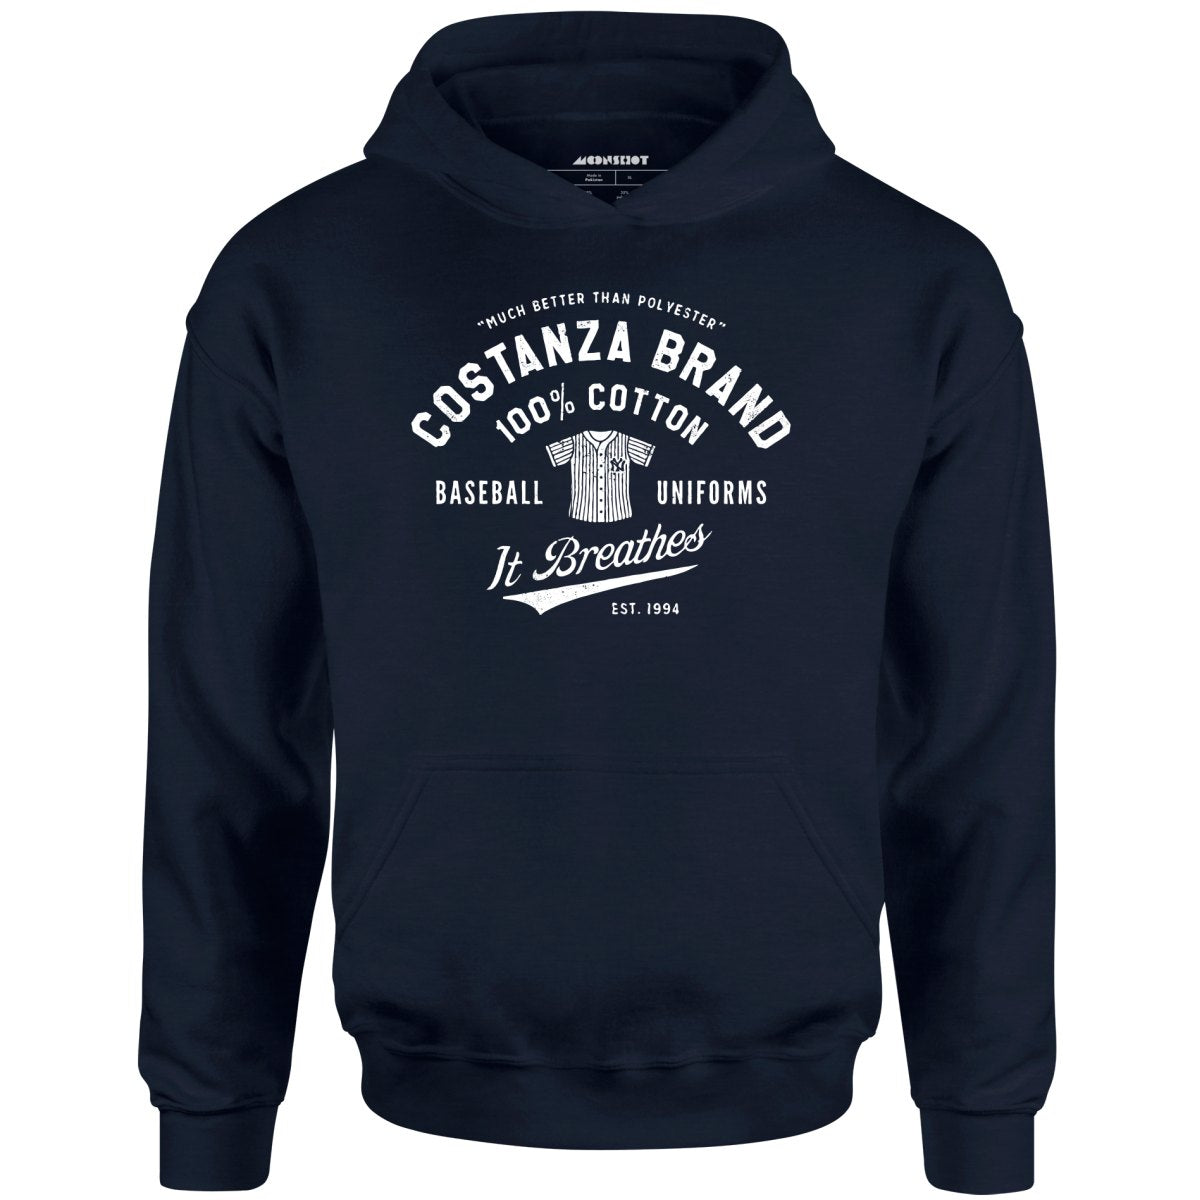 Costanza Brand Cotton Baseball Uniforms - Unisex Hoodie